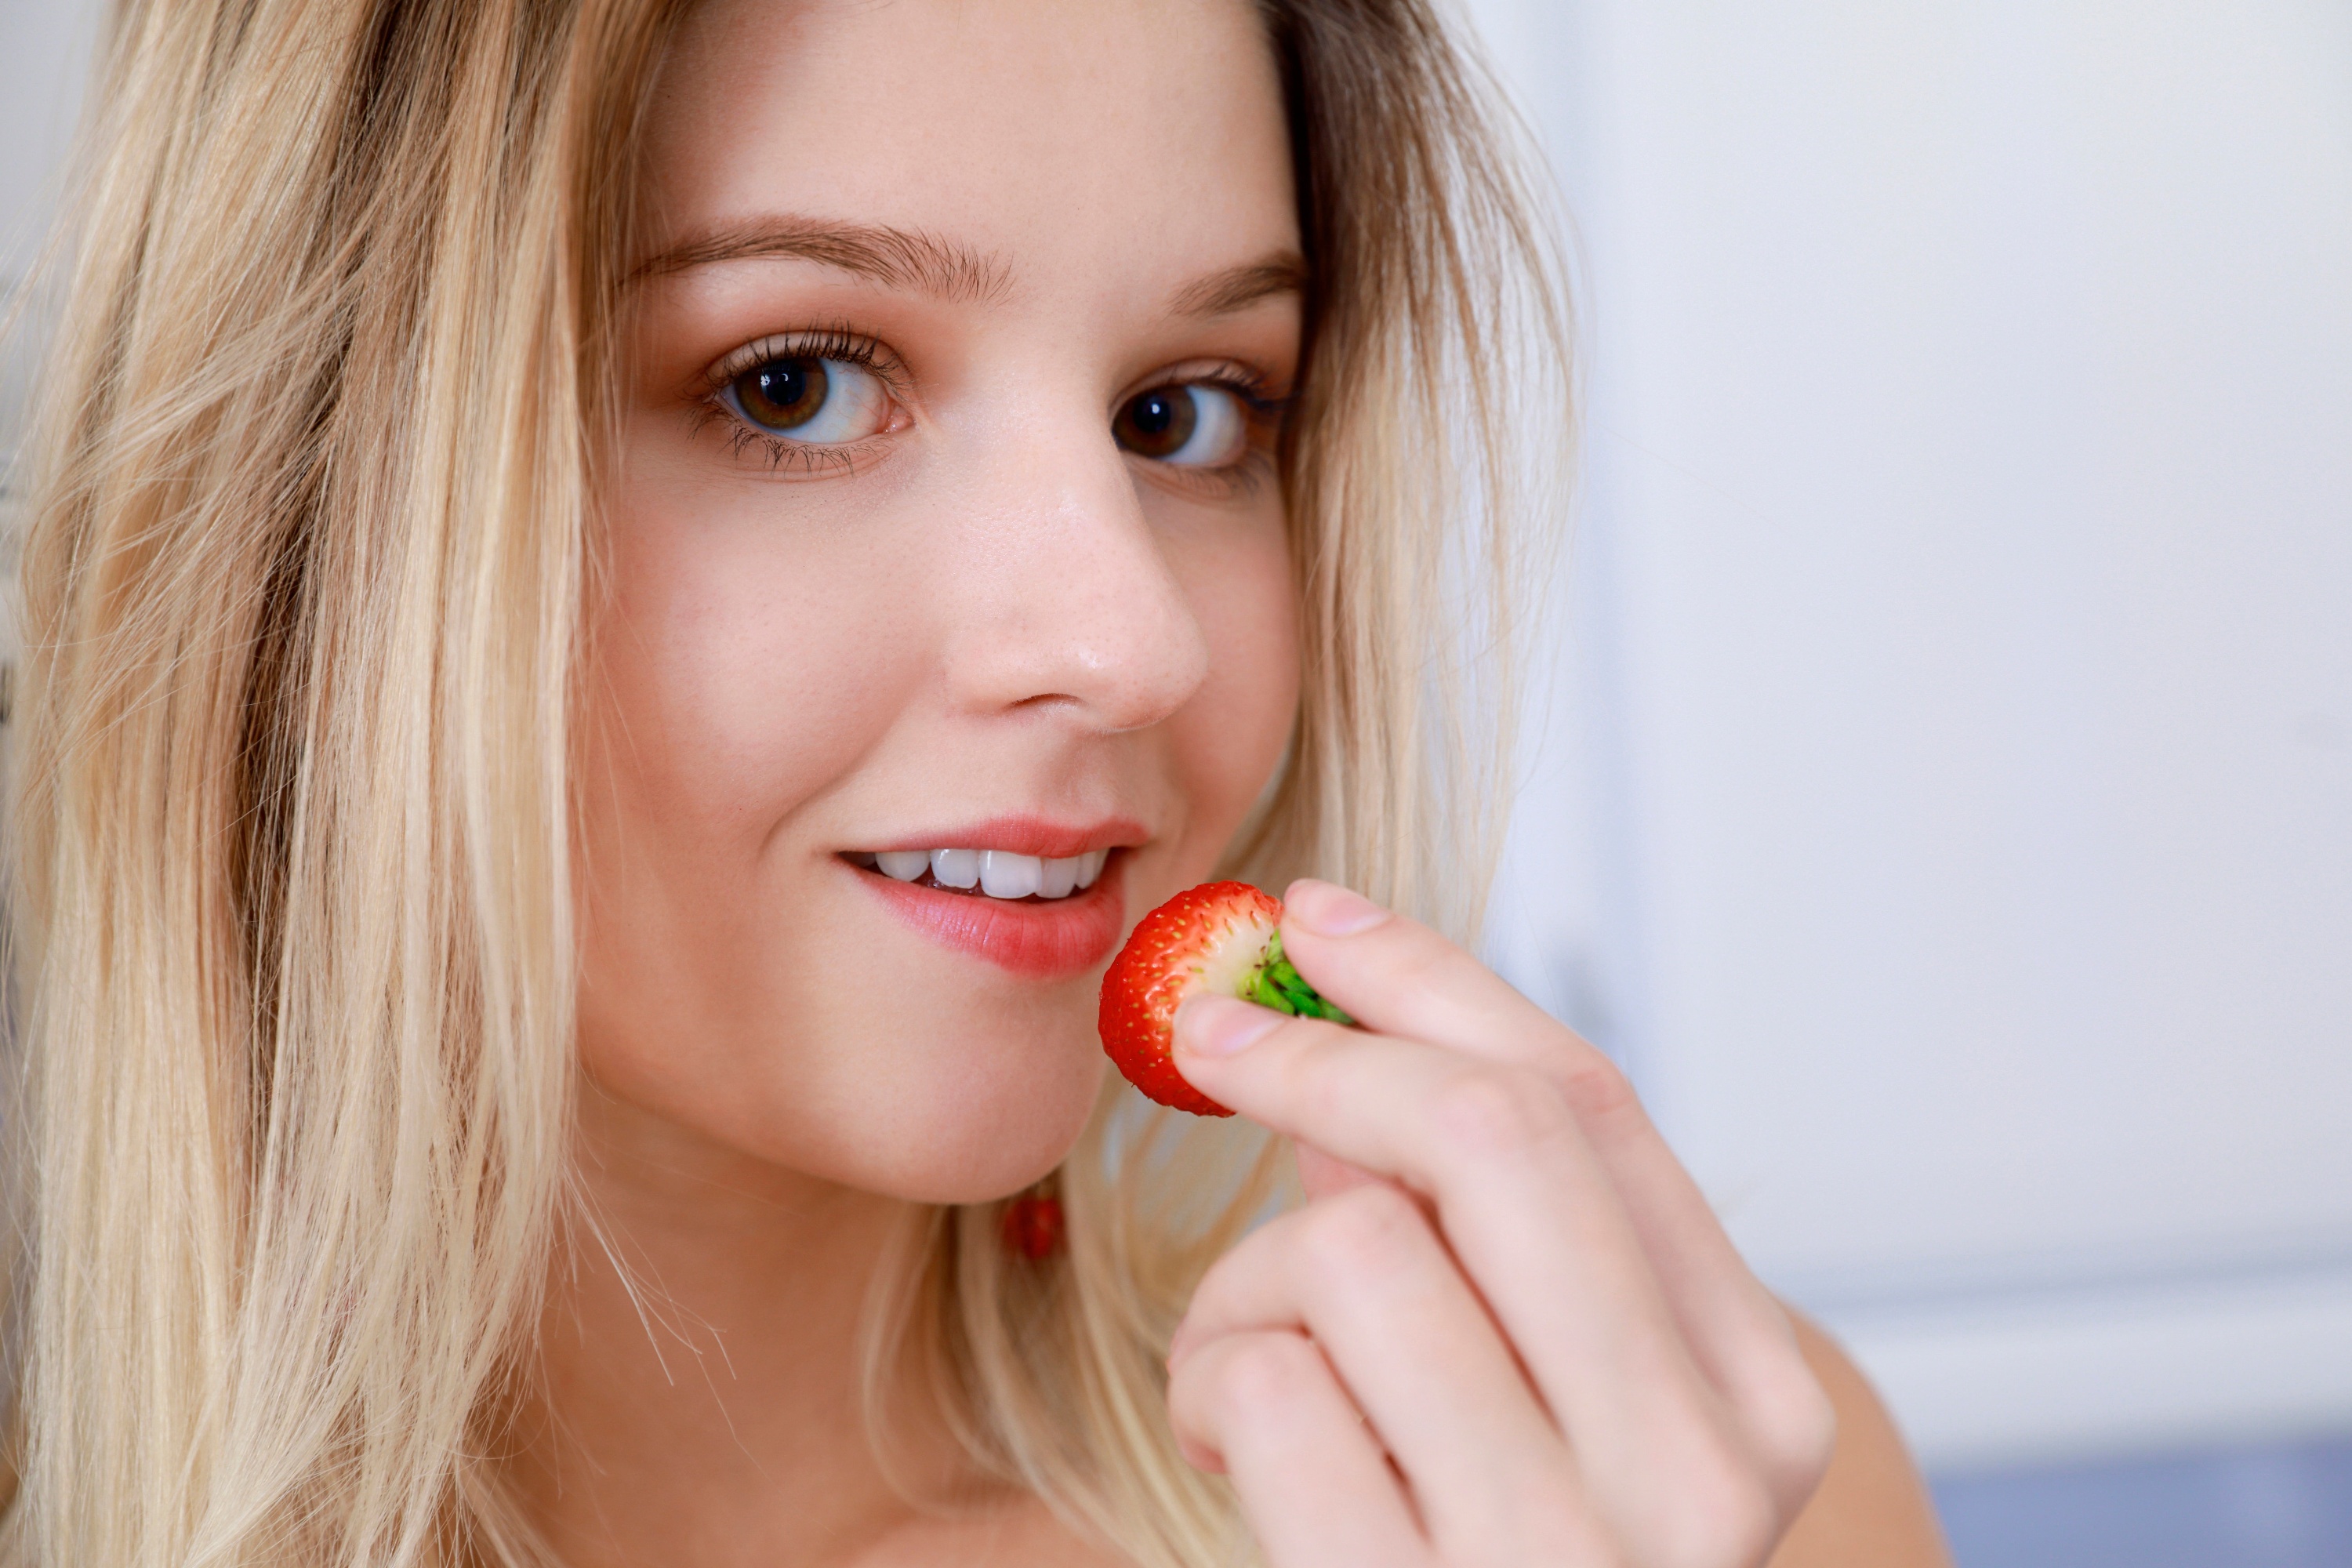 Model Red Lipstick Blonde Brown Eyes Face Eating Strawberries Women Portrait Closeup 3000x2000